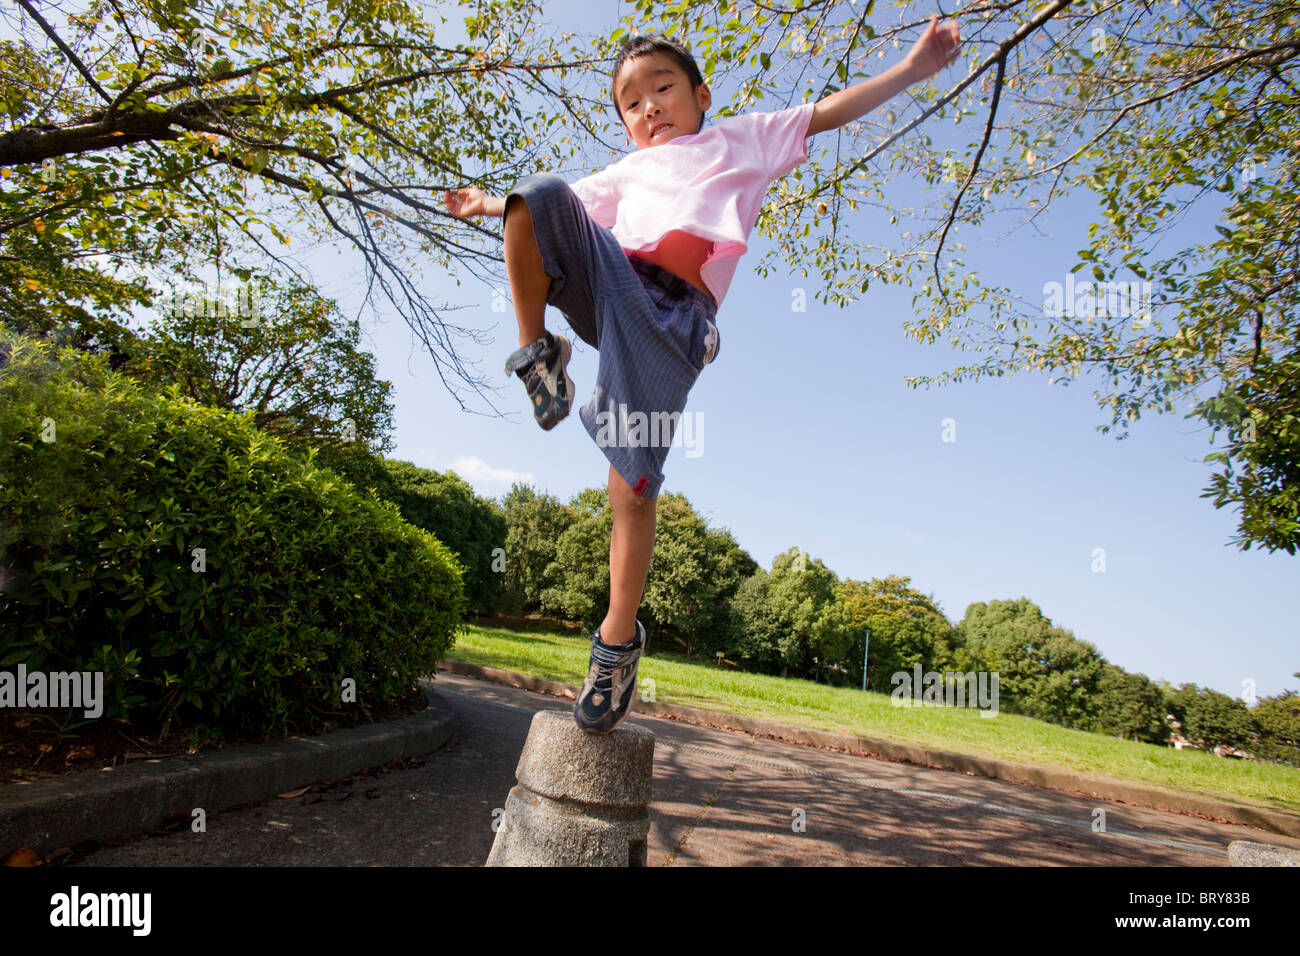 Boy standing on one leg on concrete  bollard, Japan Stock Photo